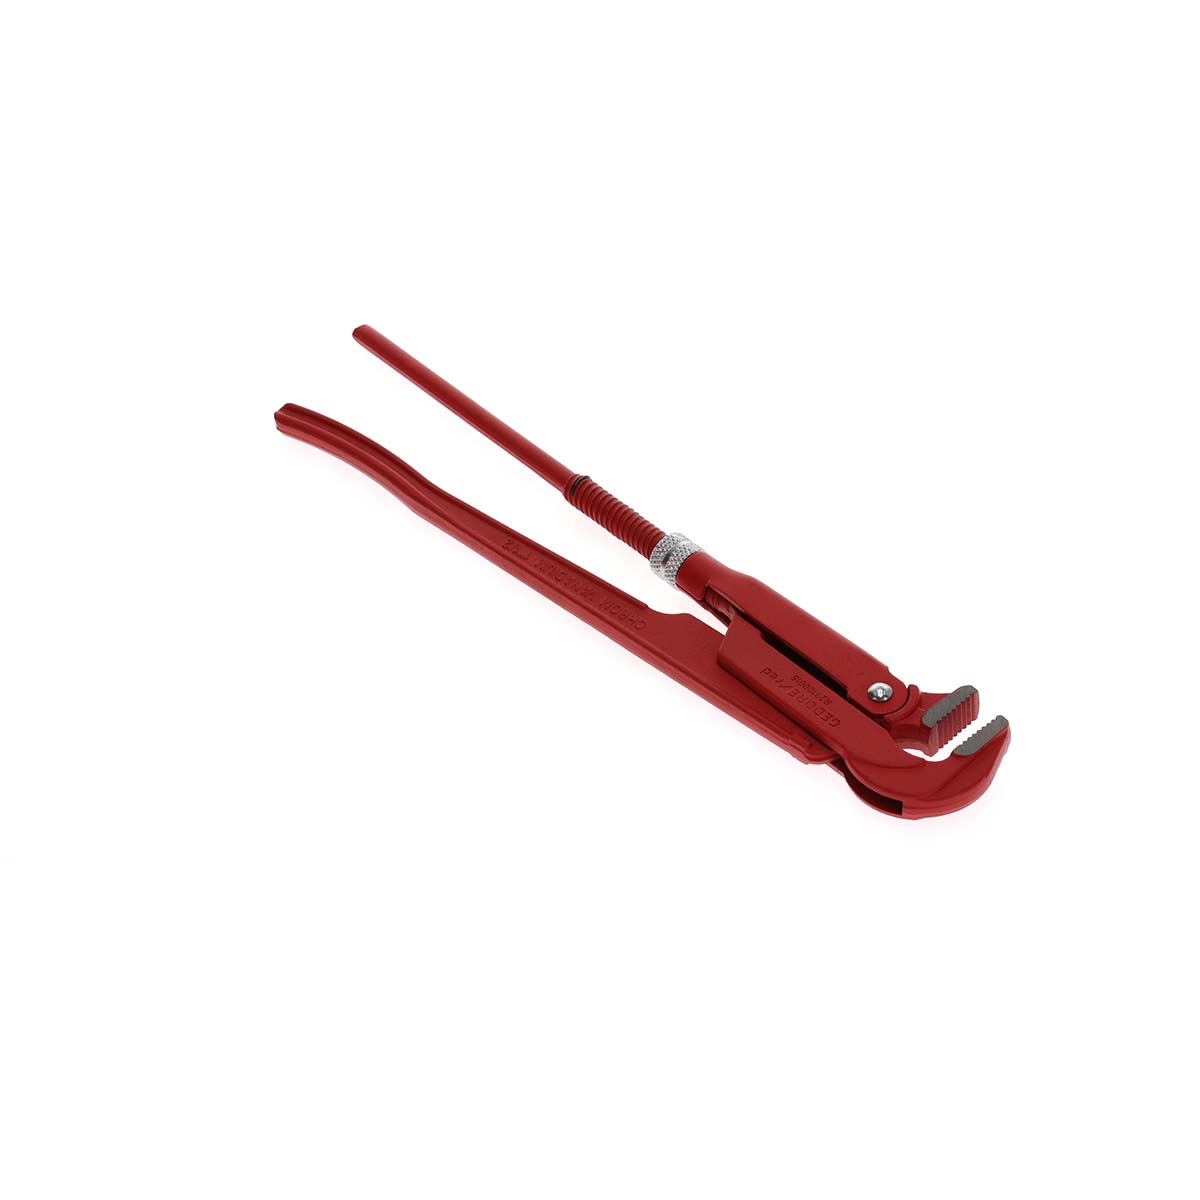 GEDORE red R27100015 - Tenaza para tubos con boca a 90°, 425mm (3301158)